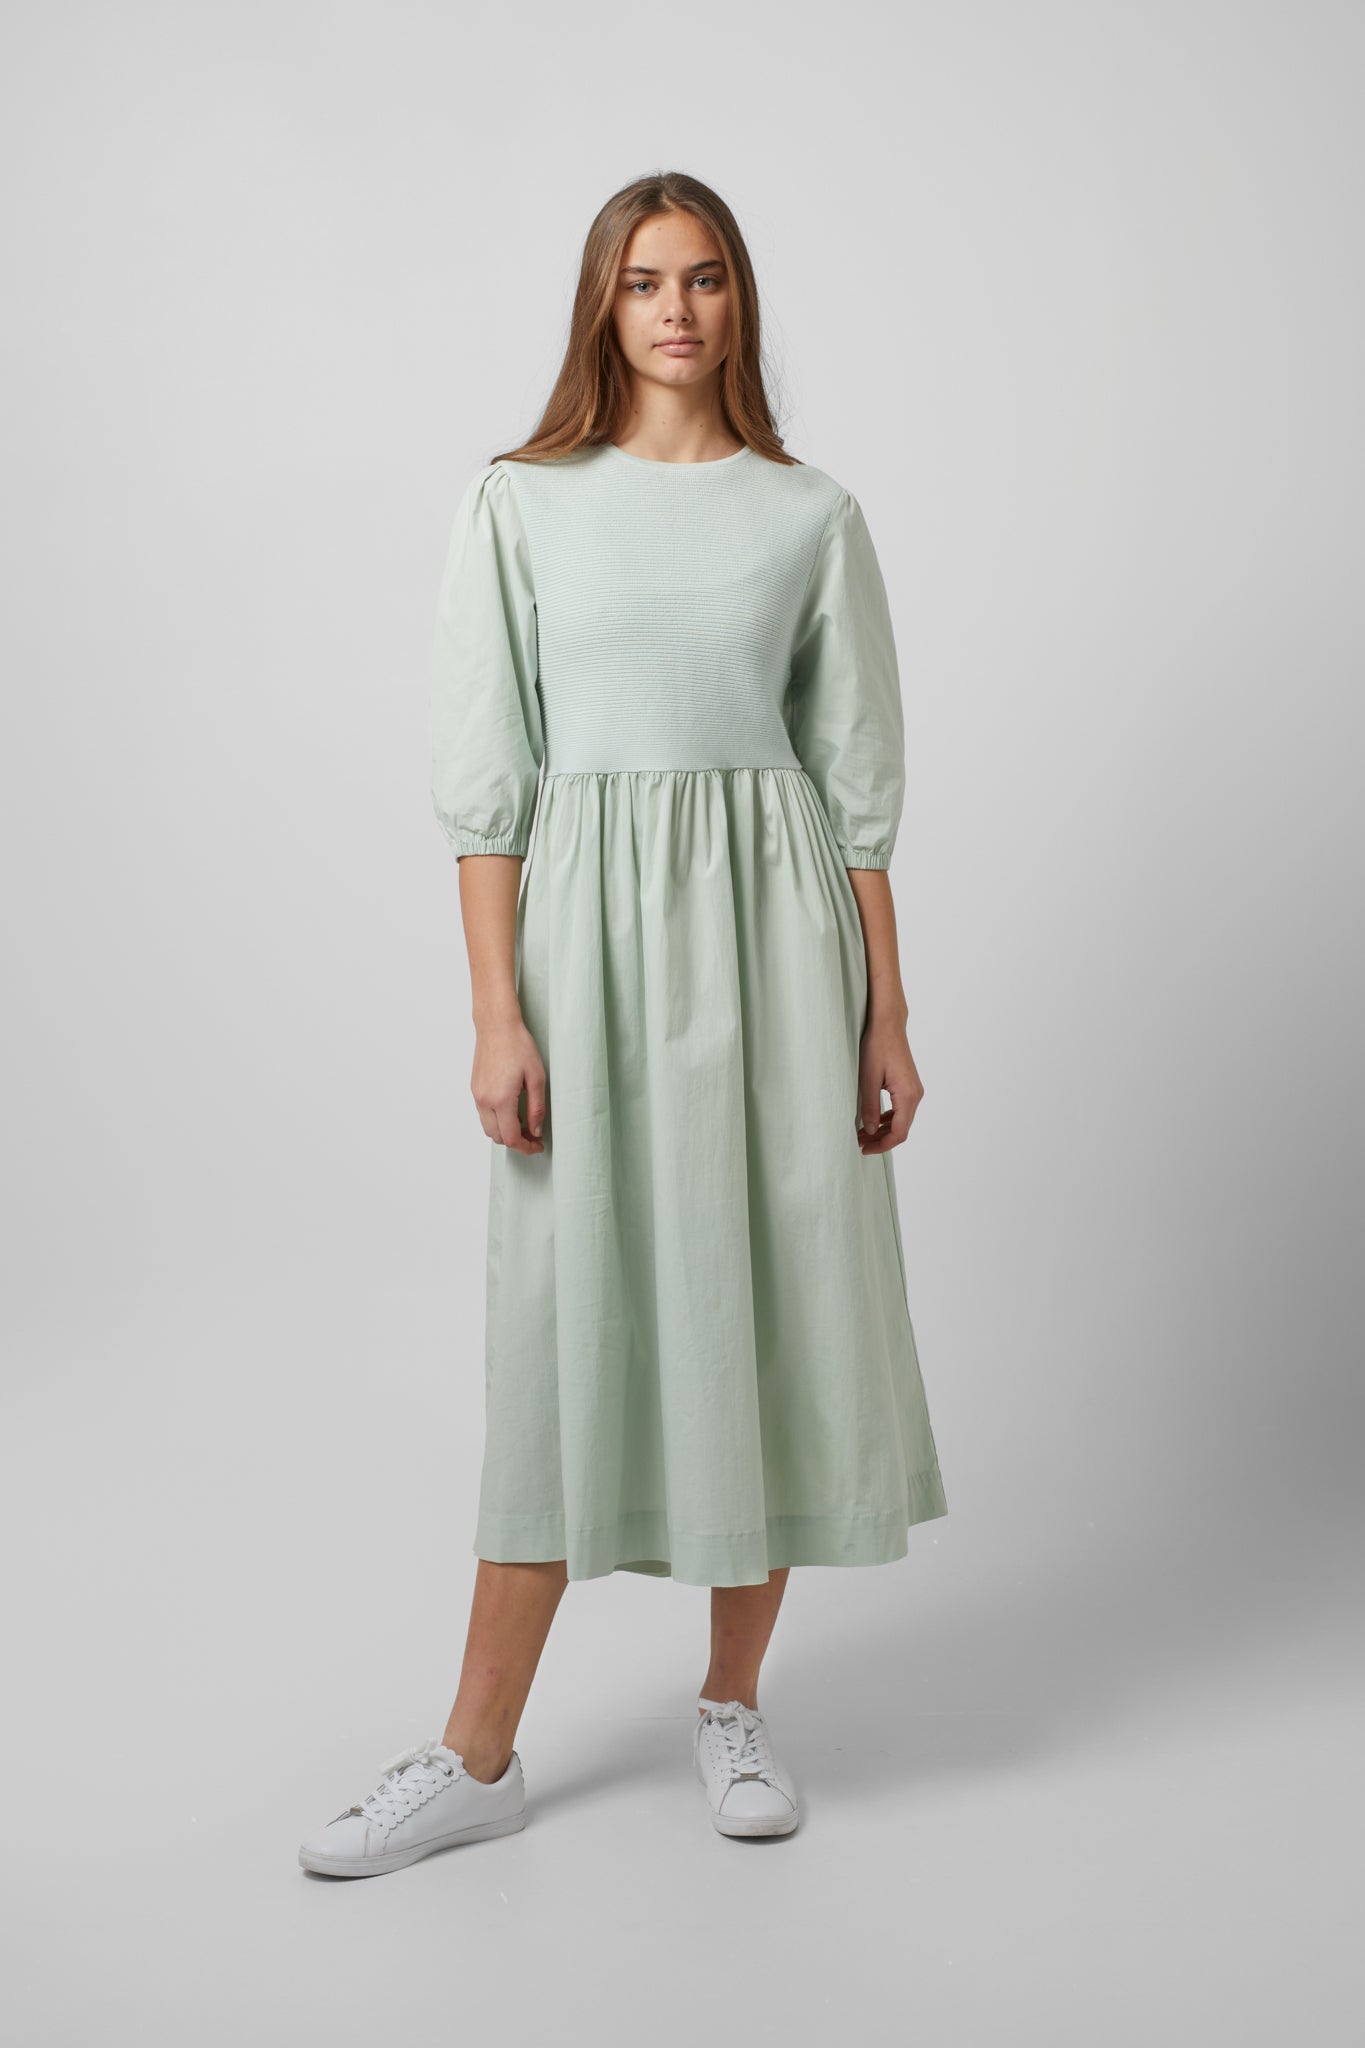 Mint Dress #7907 FINAL SALE